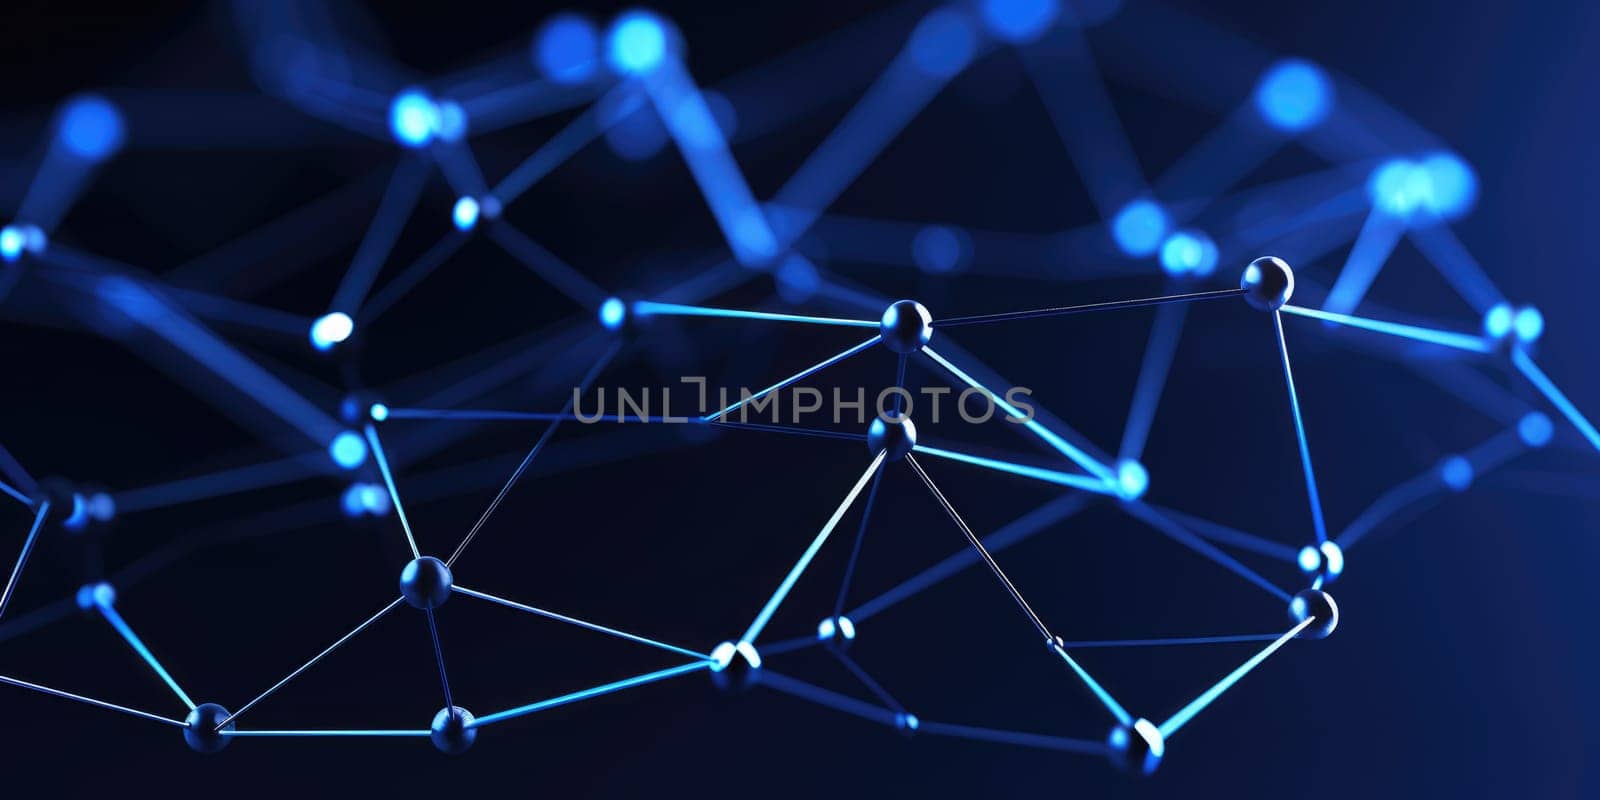 3D network connections with plexus design blue background wallpaper. Generative AI weber. by biancoblue